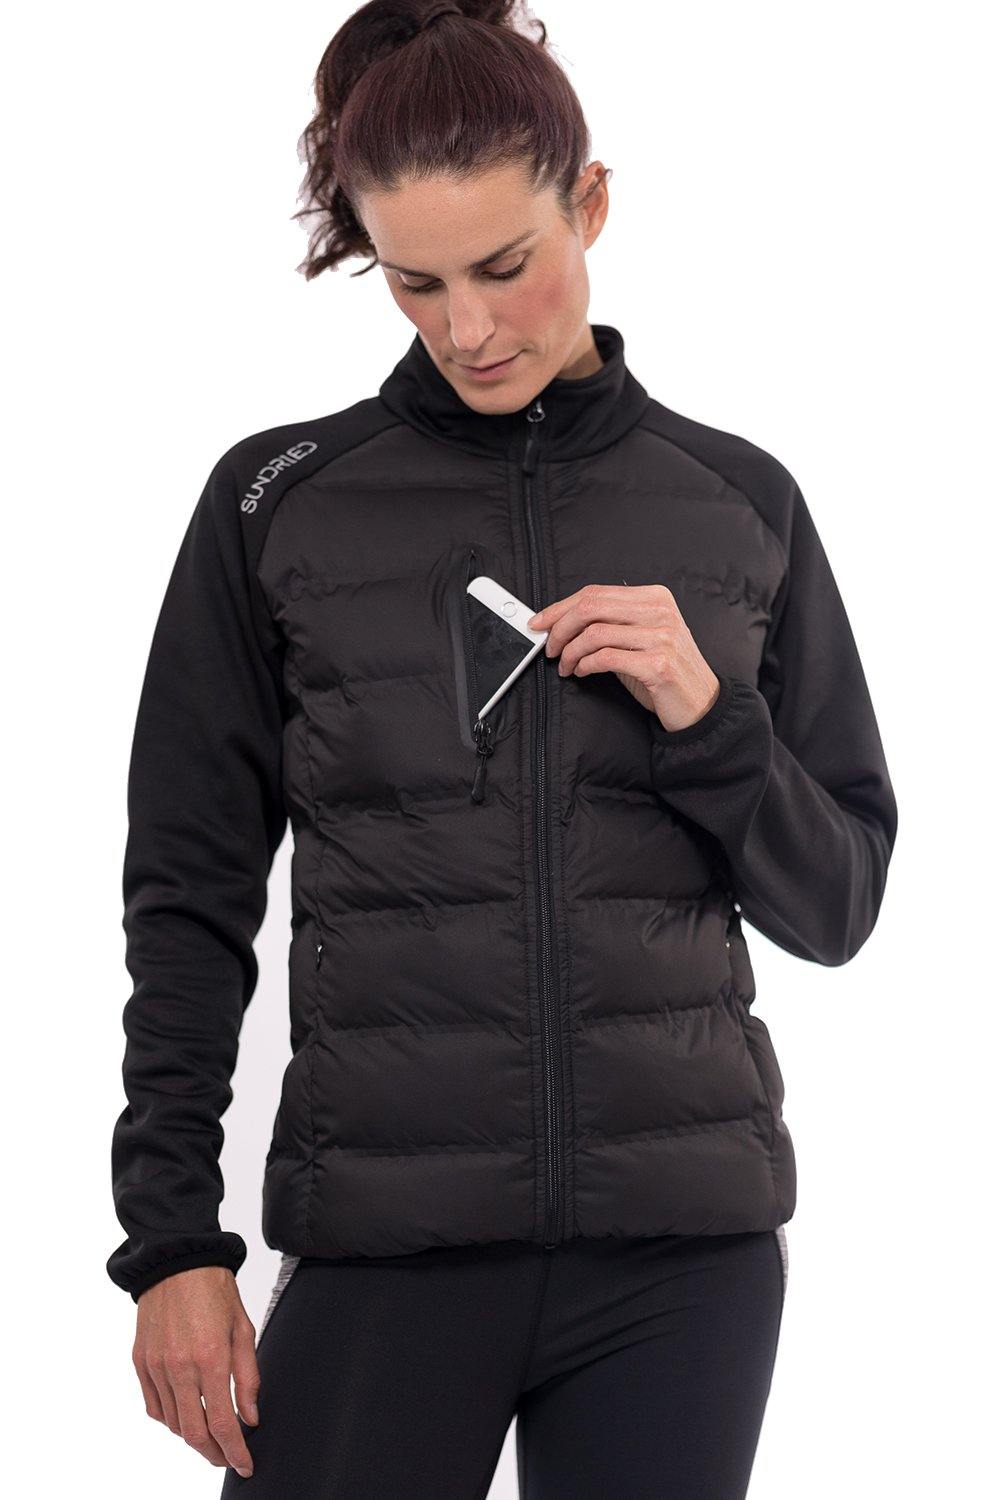 Sundried Monte Viso Women's Padded Jacket Jackets Activewear